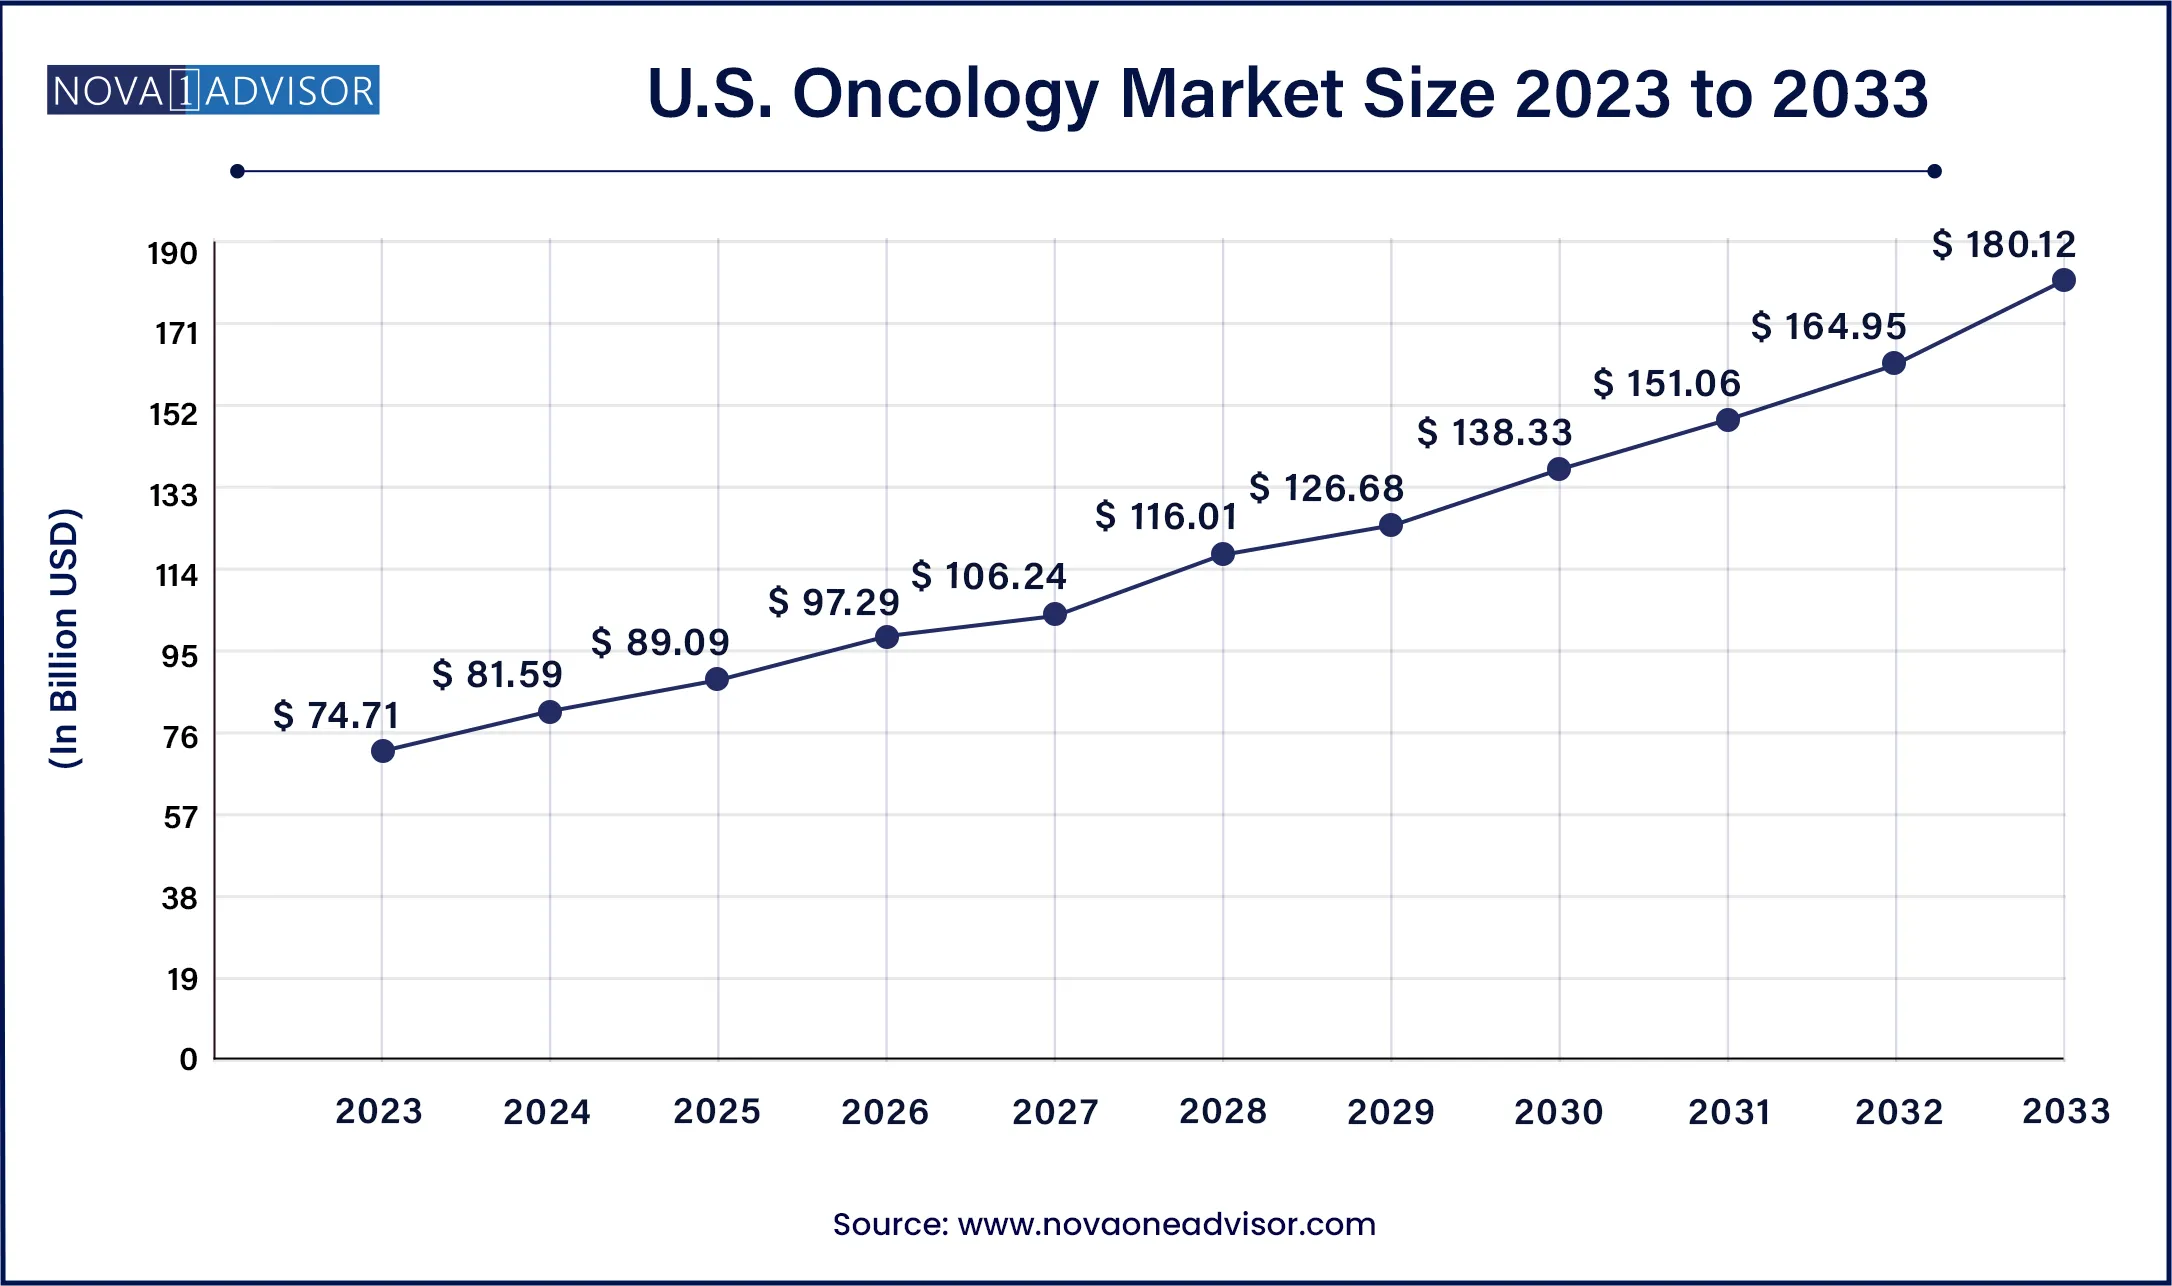 U.S. Oncology Market Size, 2024 to 2033